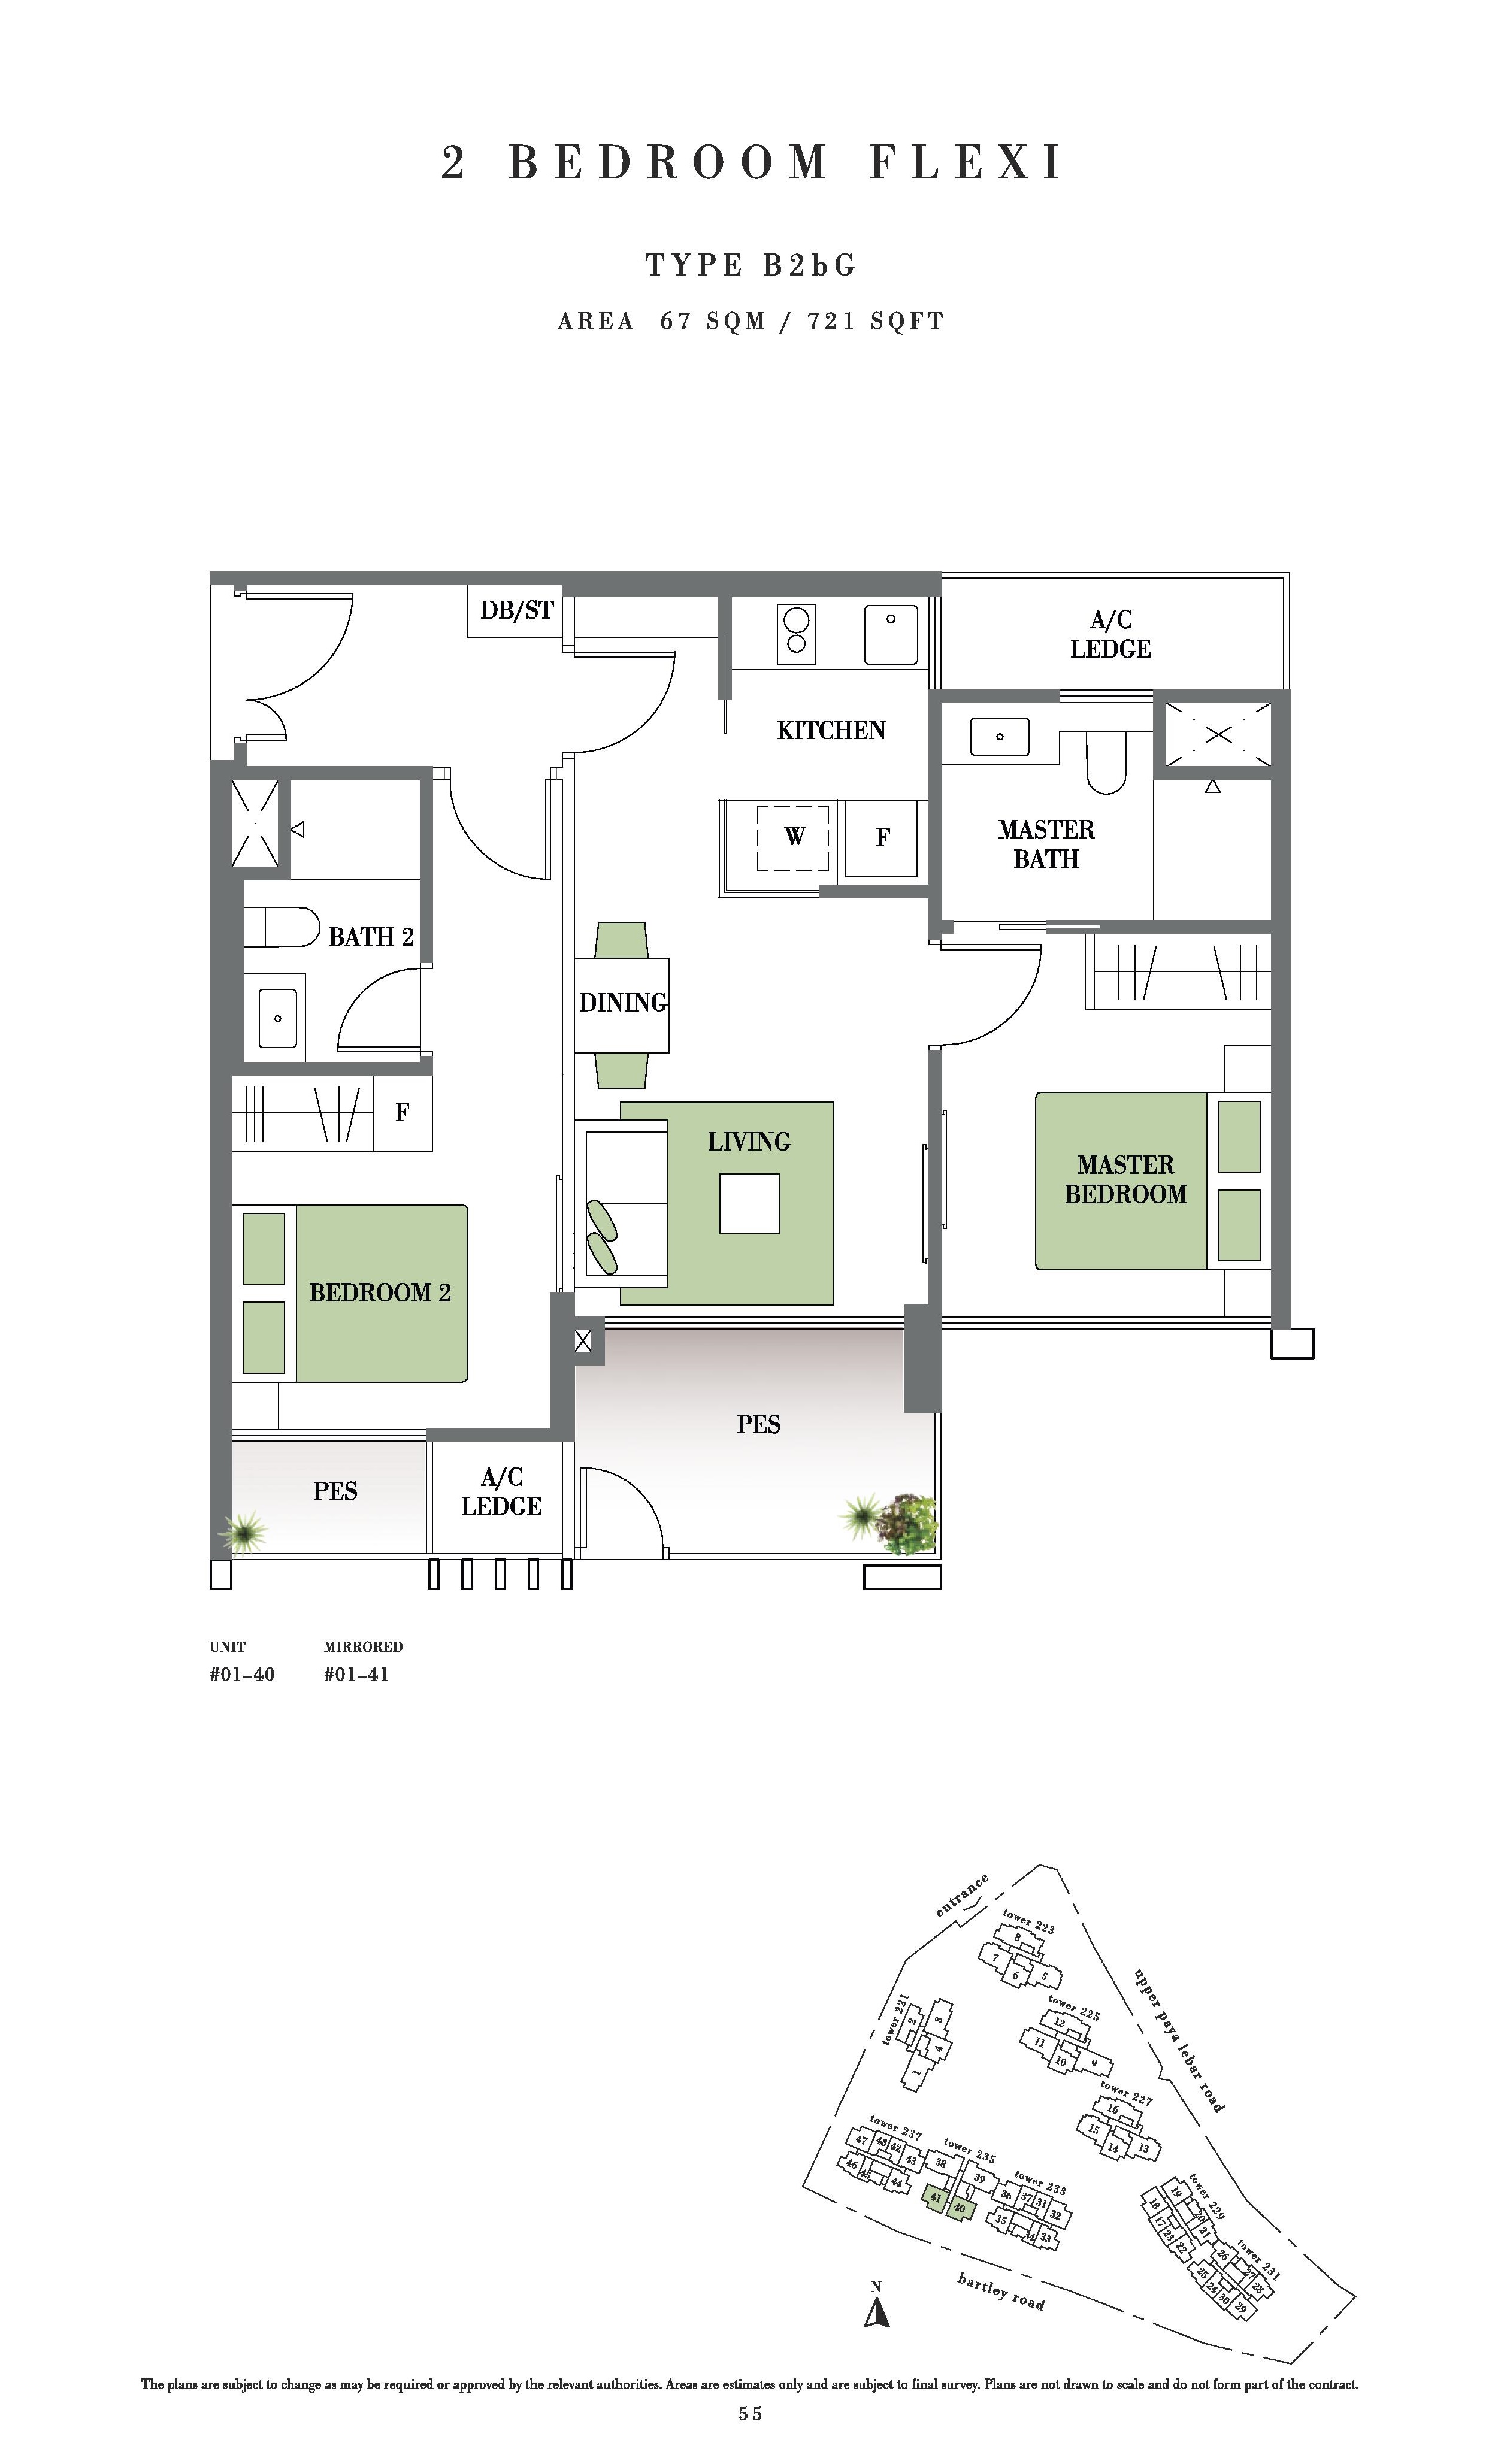 Botanique @ Bartley 2 Bedroom Flexi PES Floor Plans Type B2bG